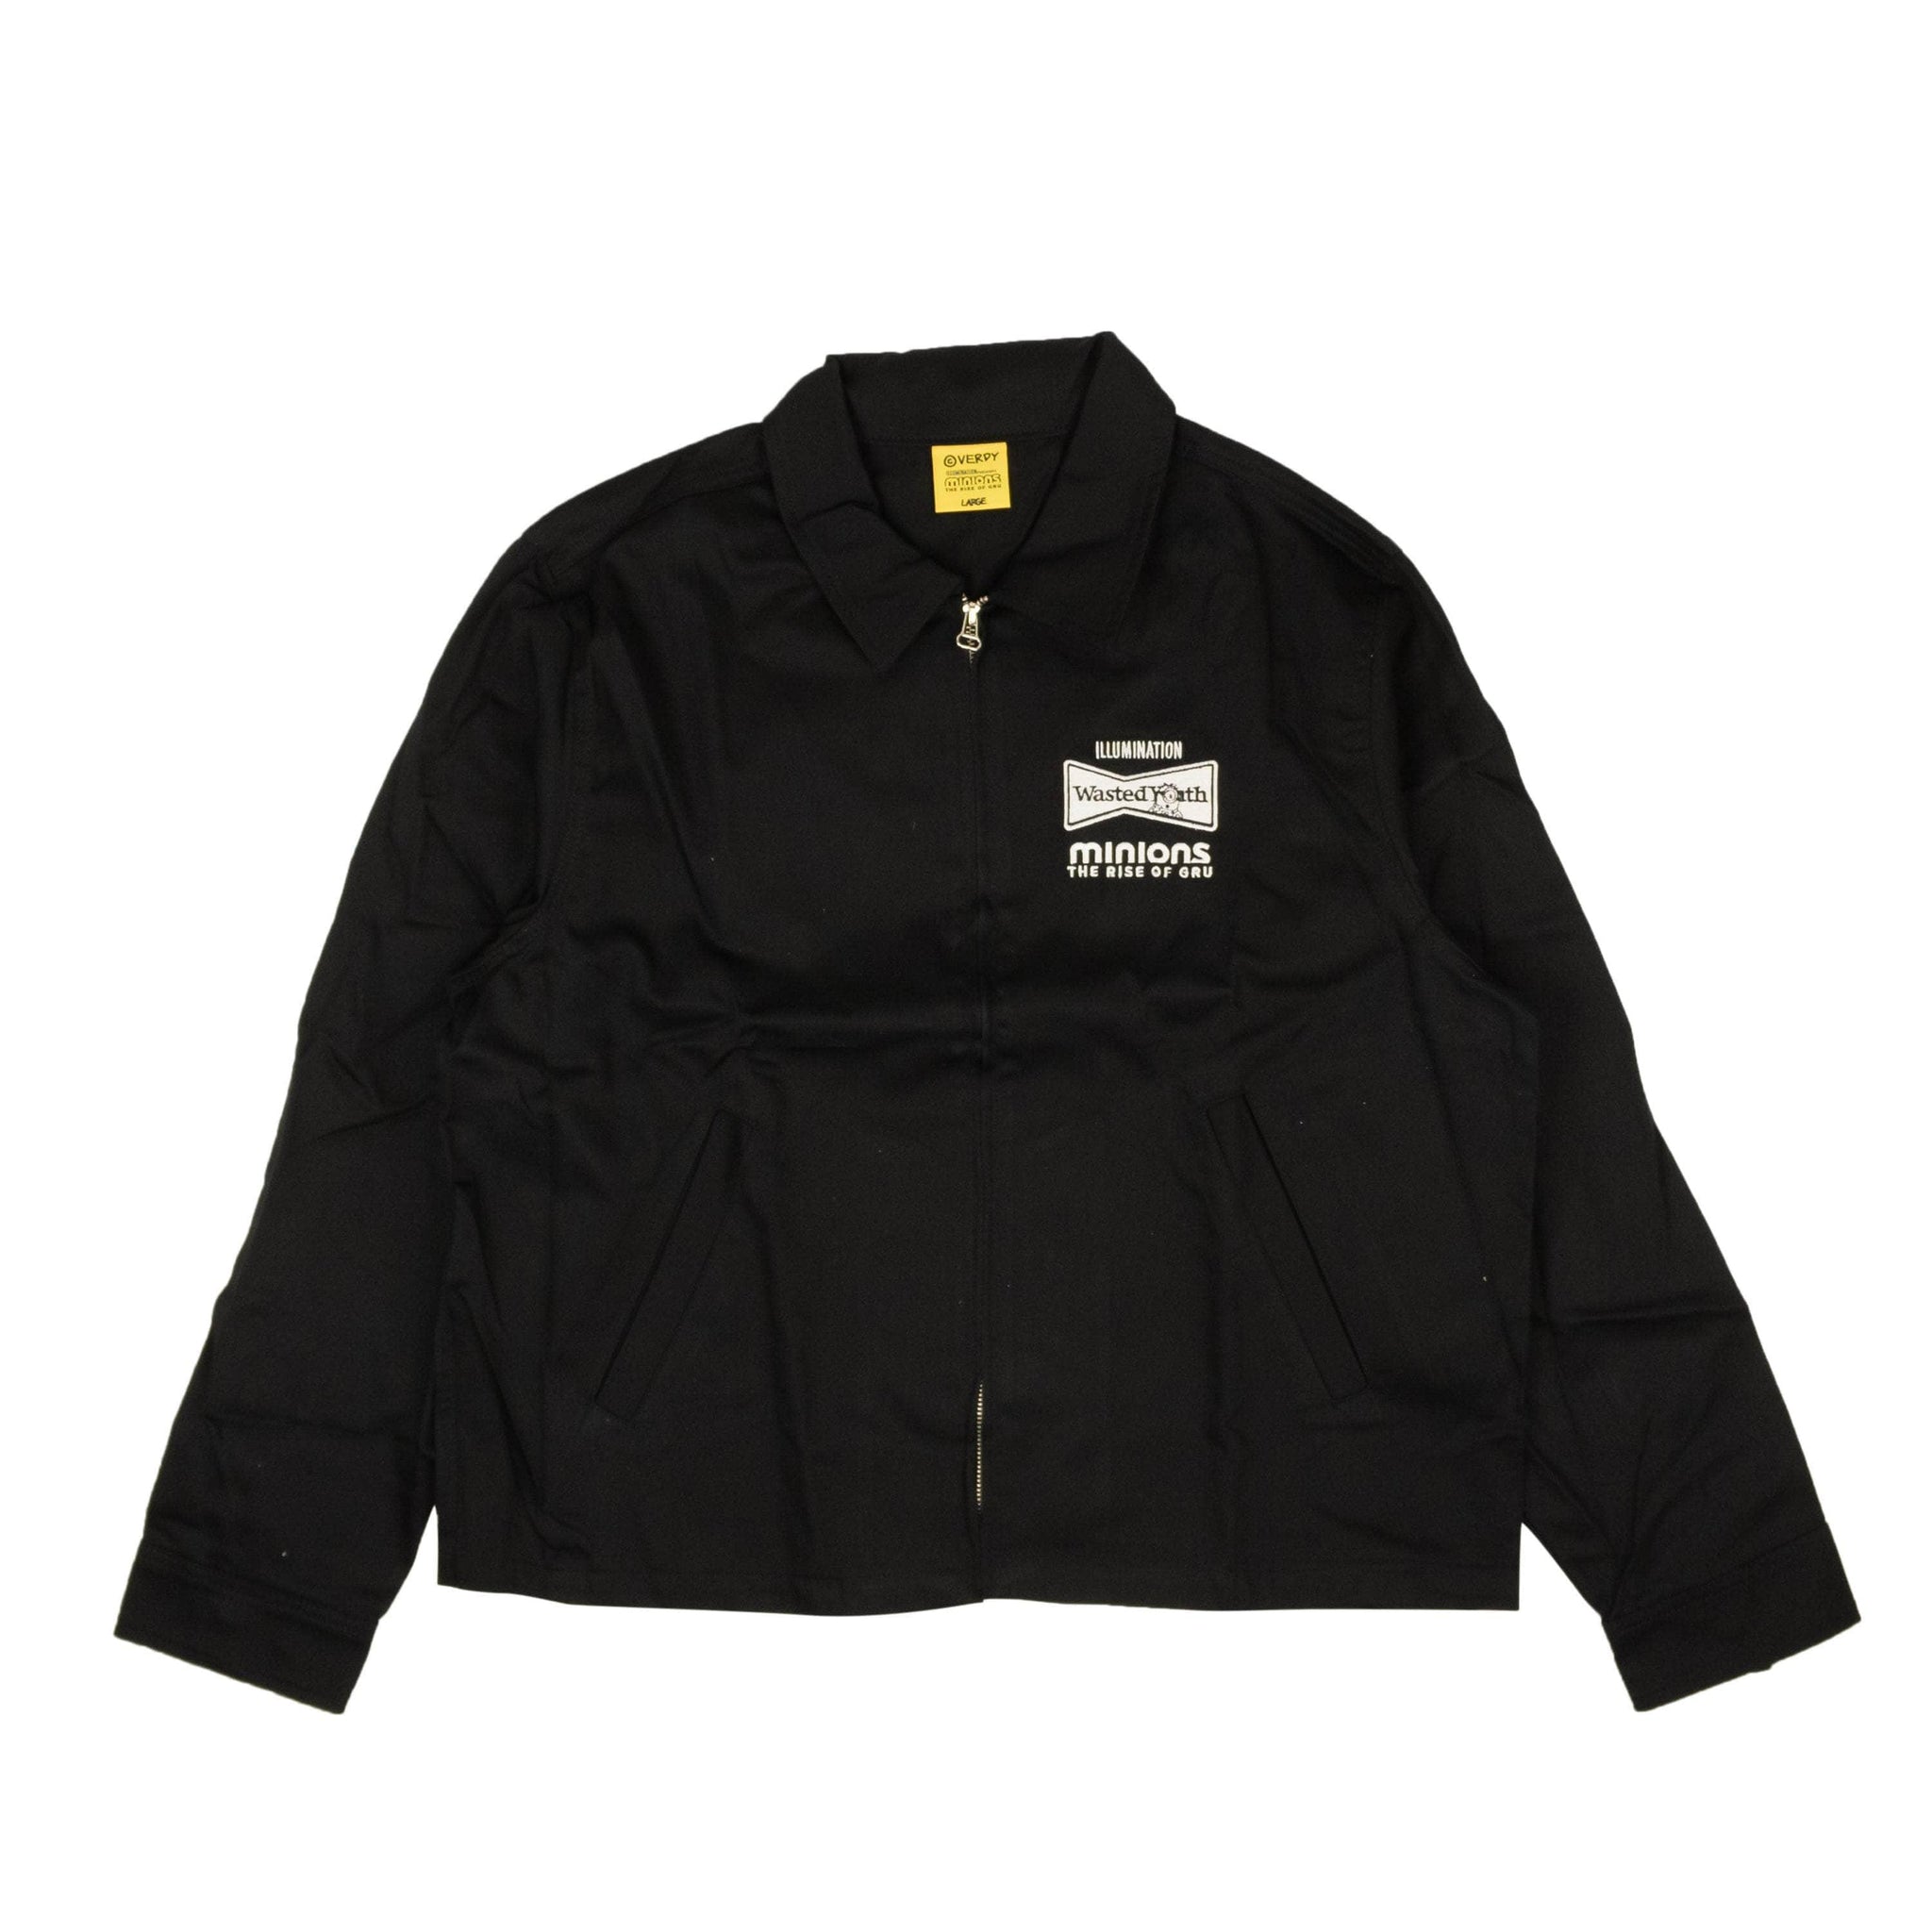 Minions Black Zip-Up Jacket - GBNY